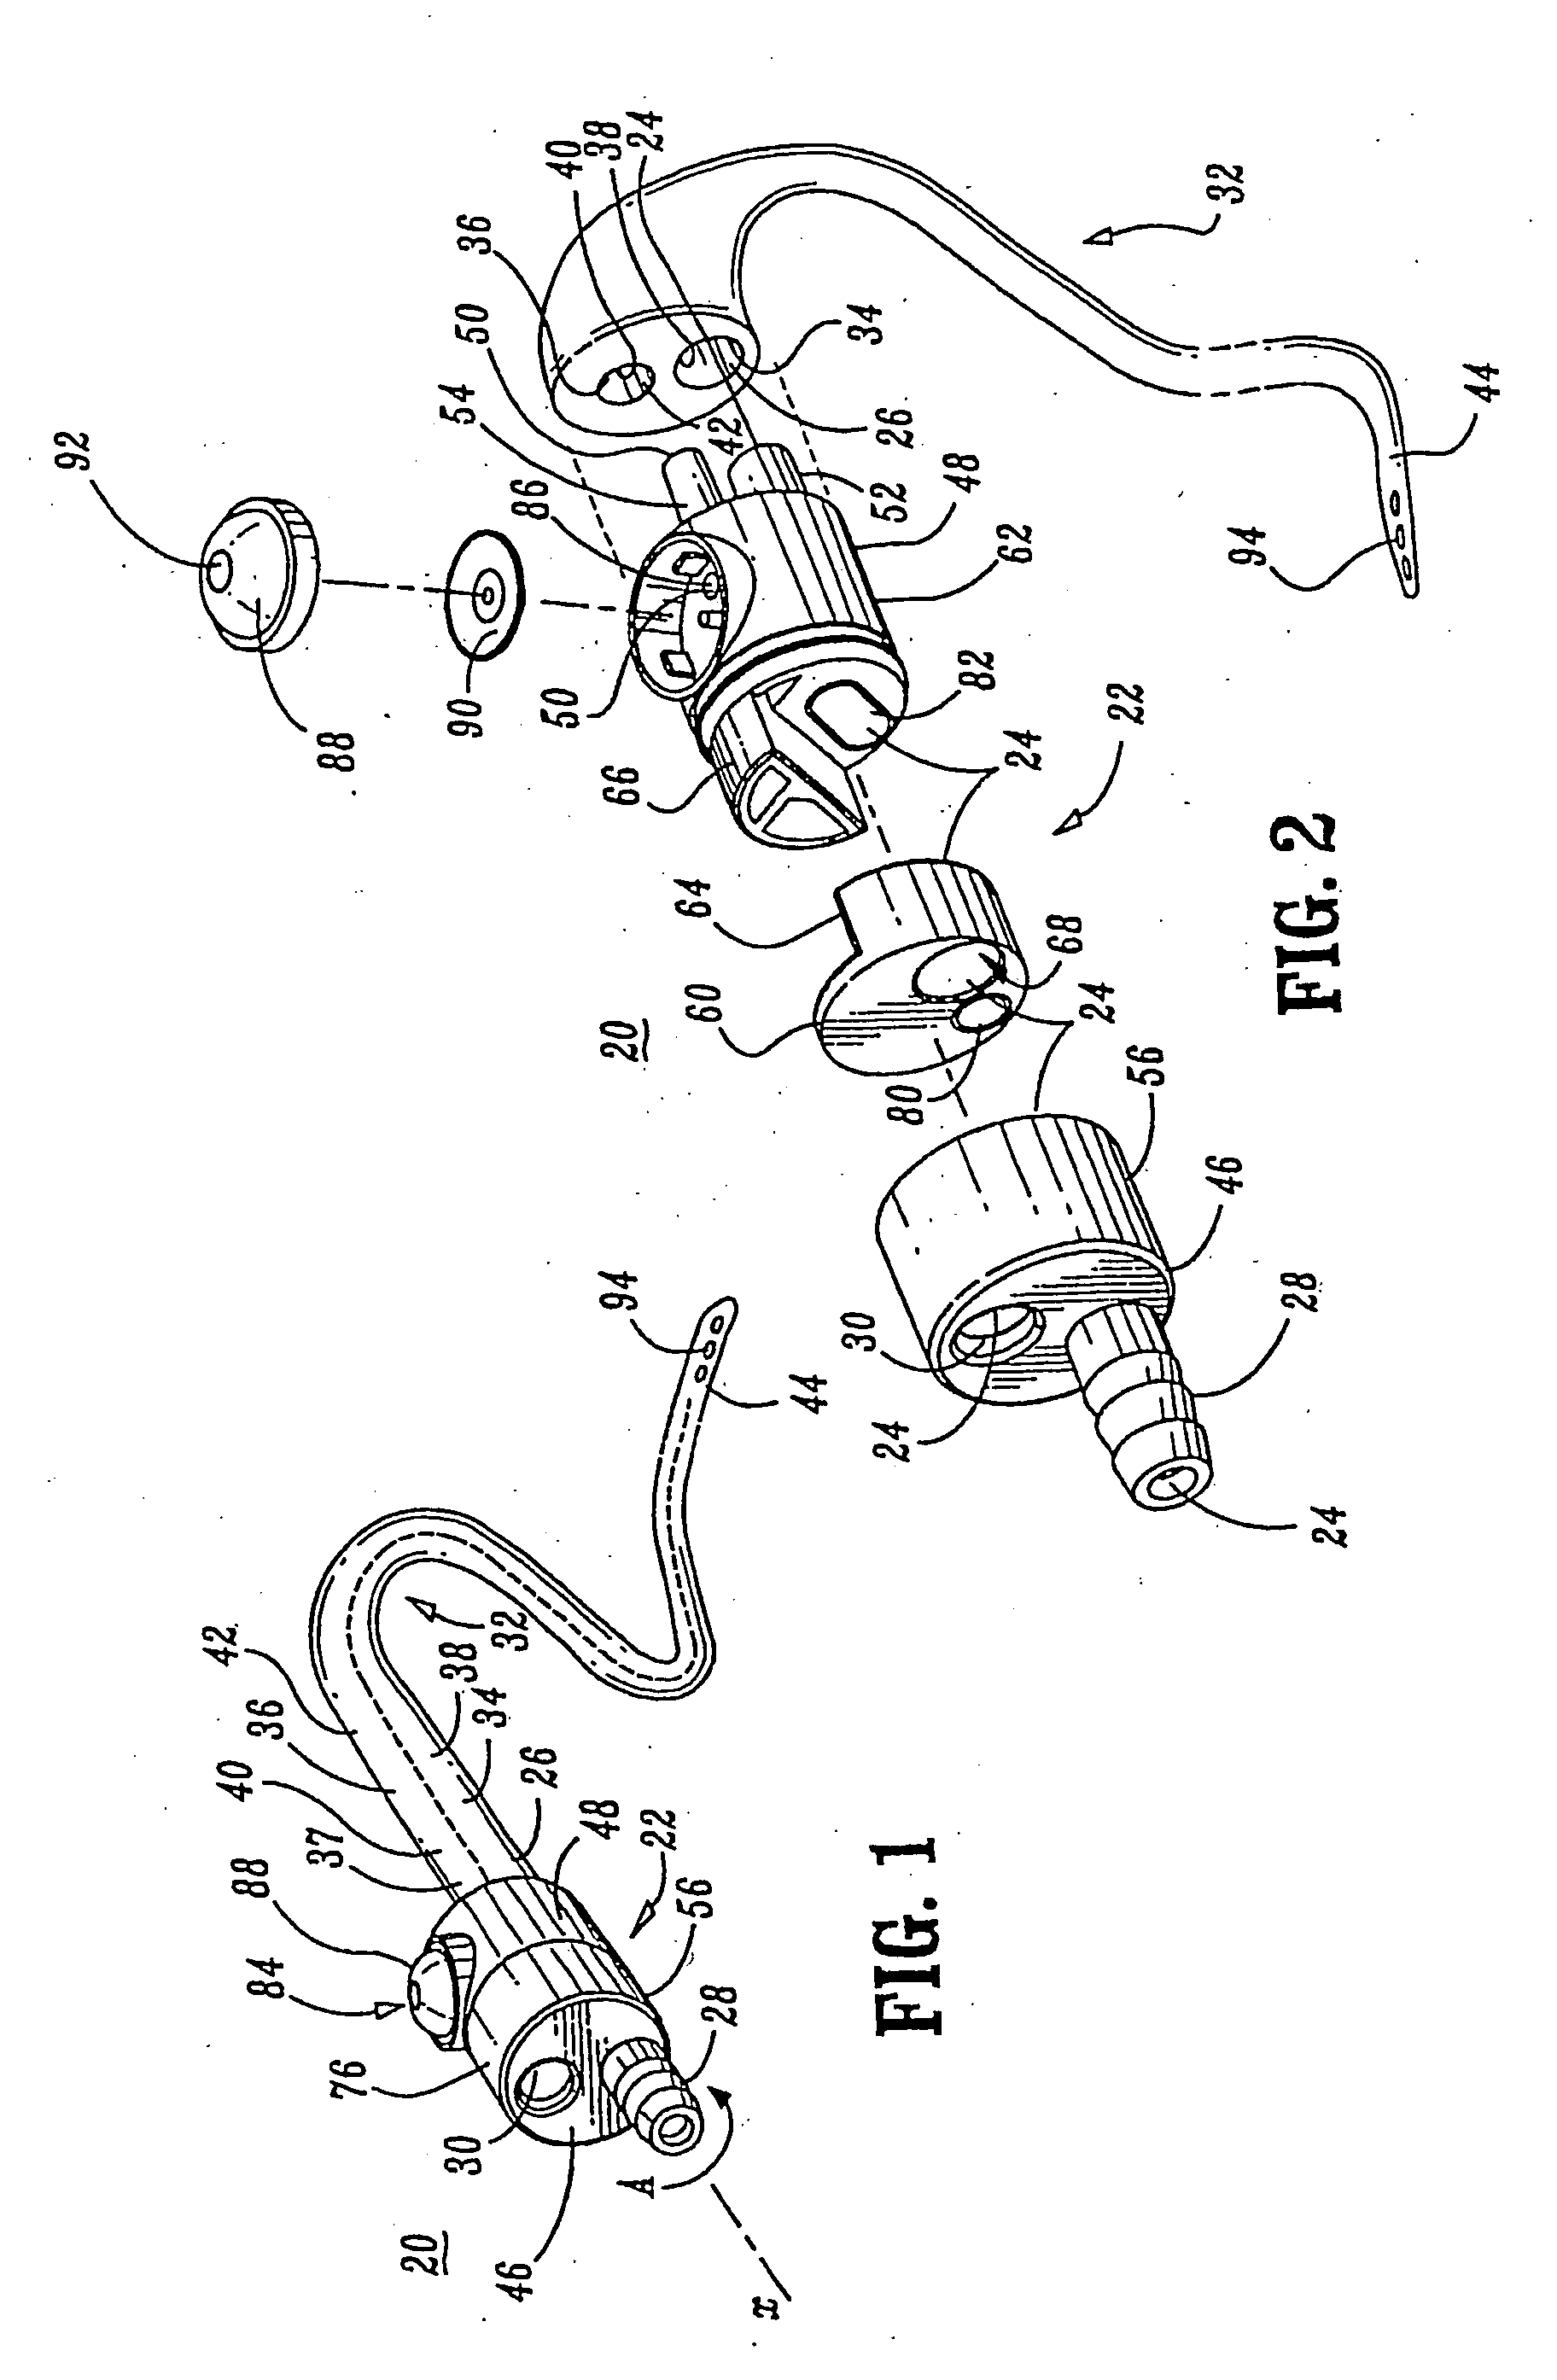 Automatic valve